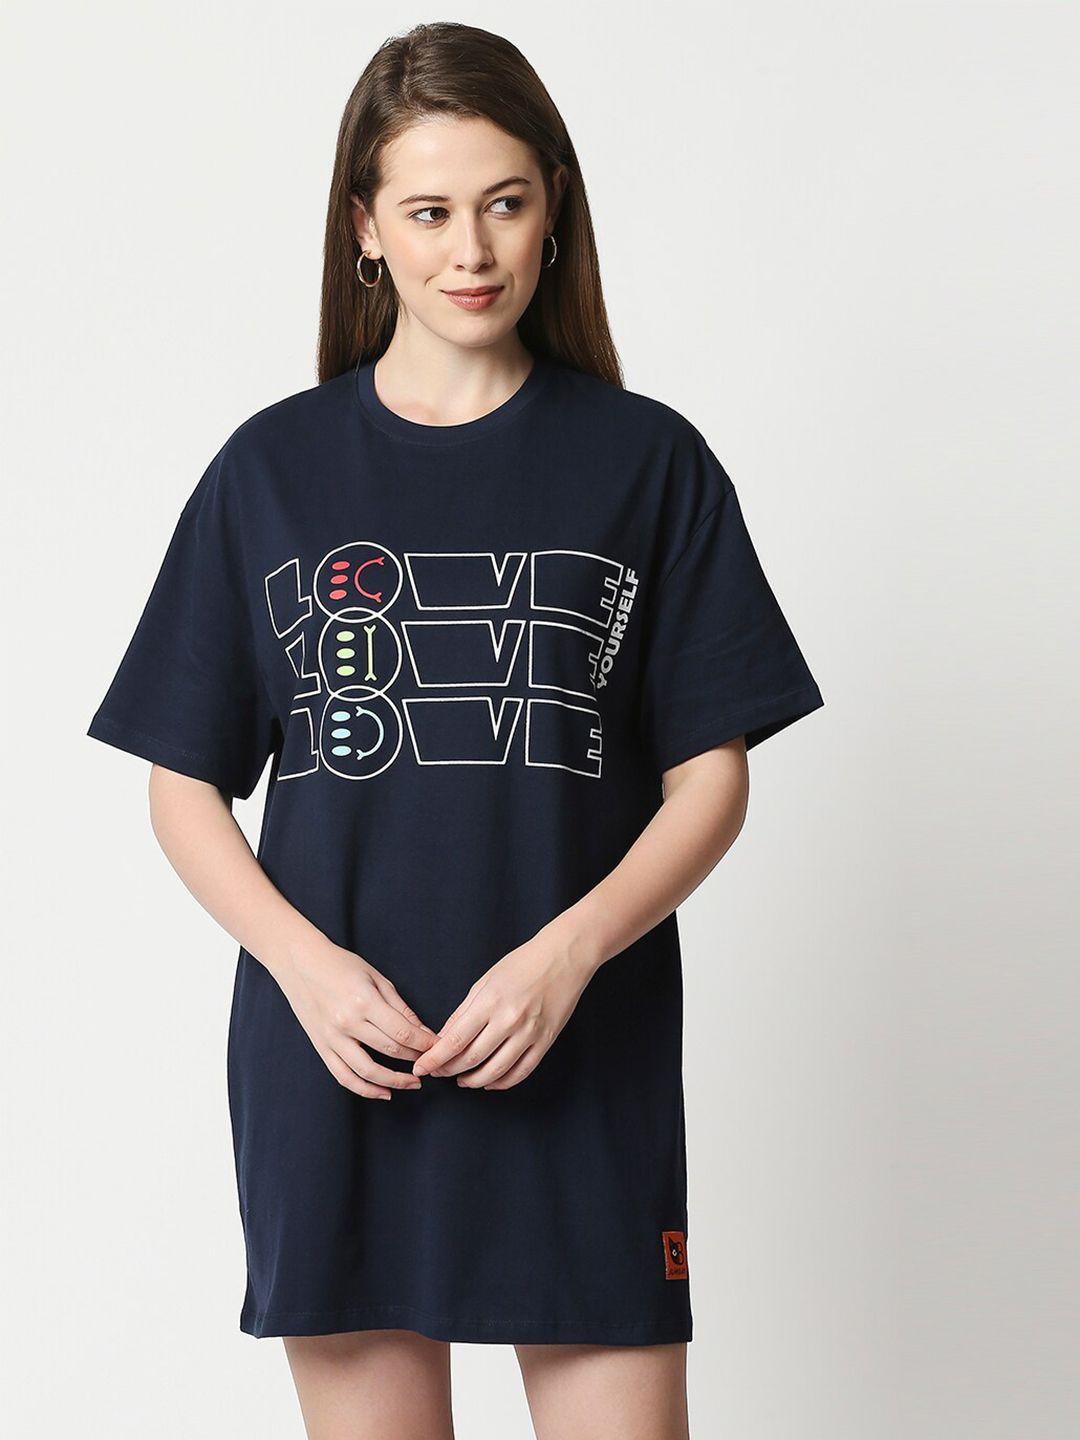 blamblack women navy blue printed typography  t-shirt short sleeves dress